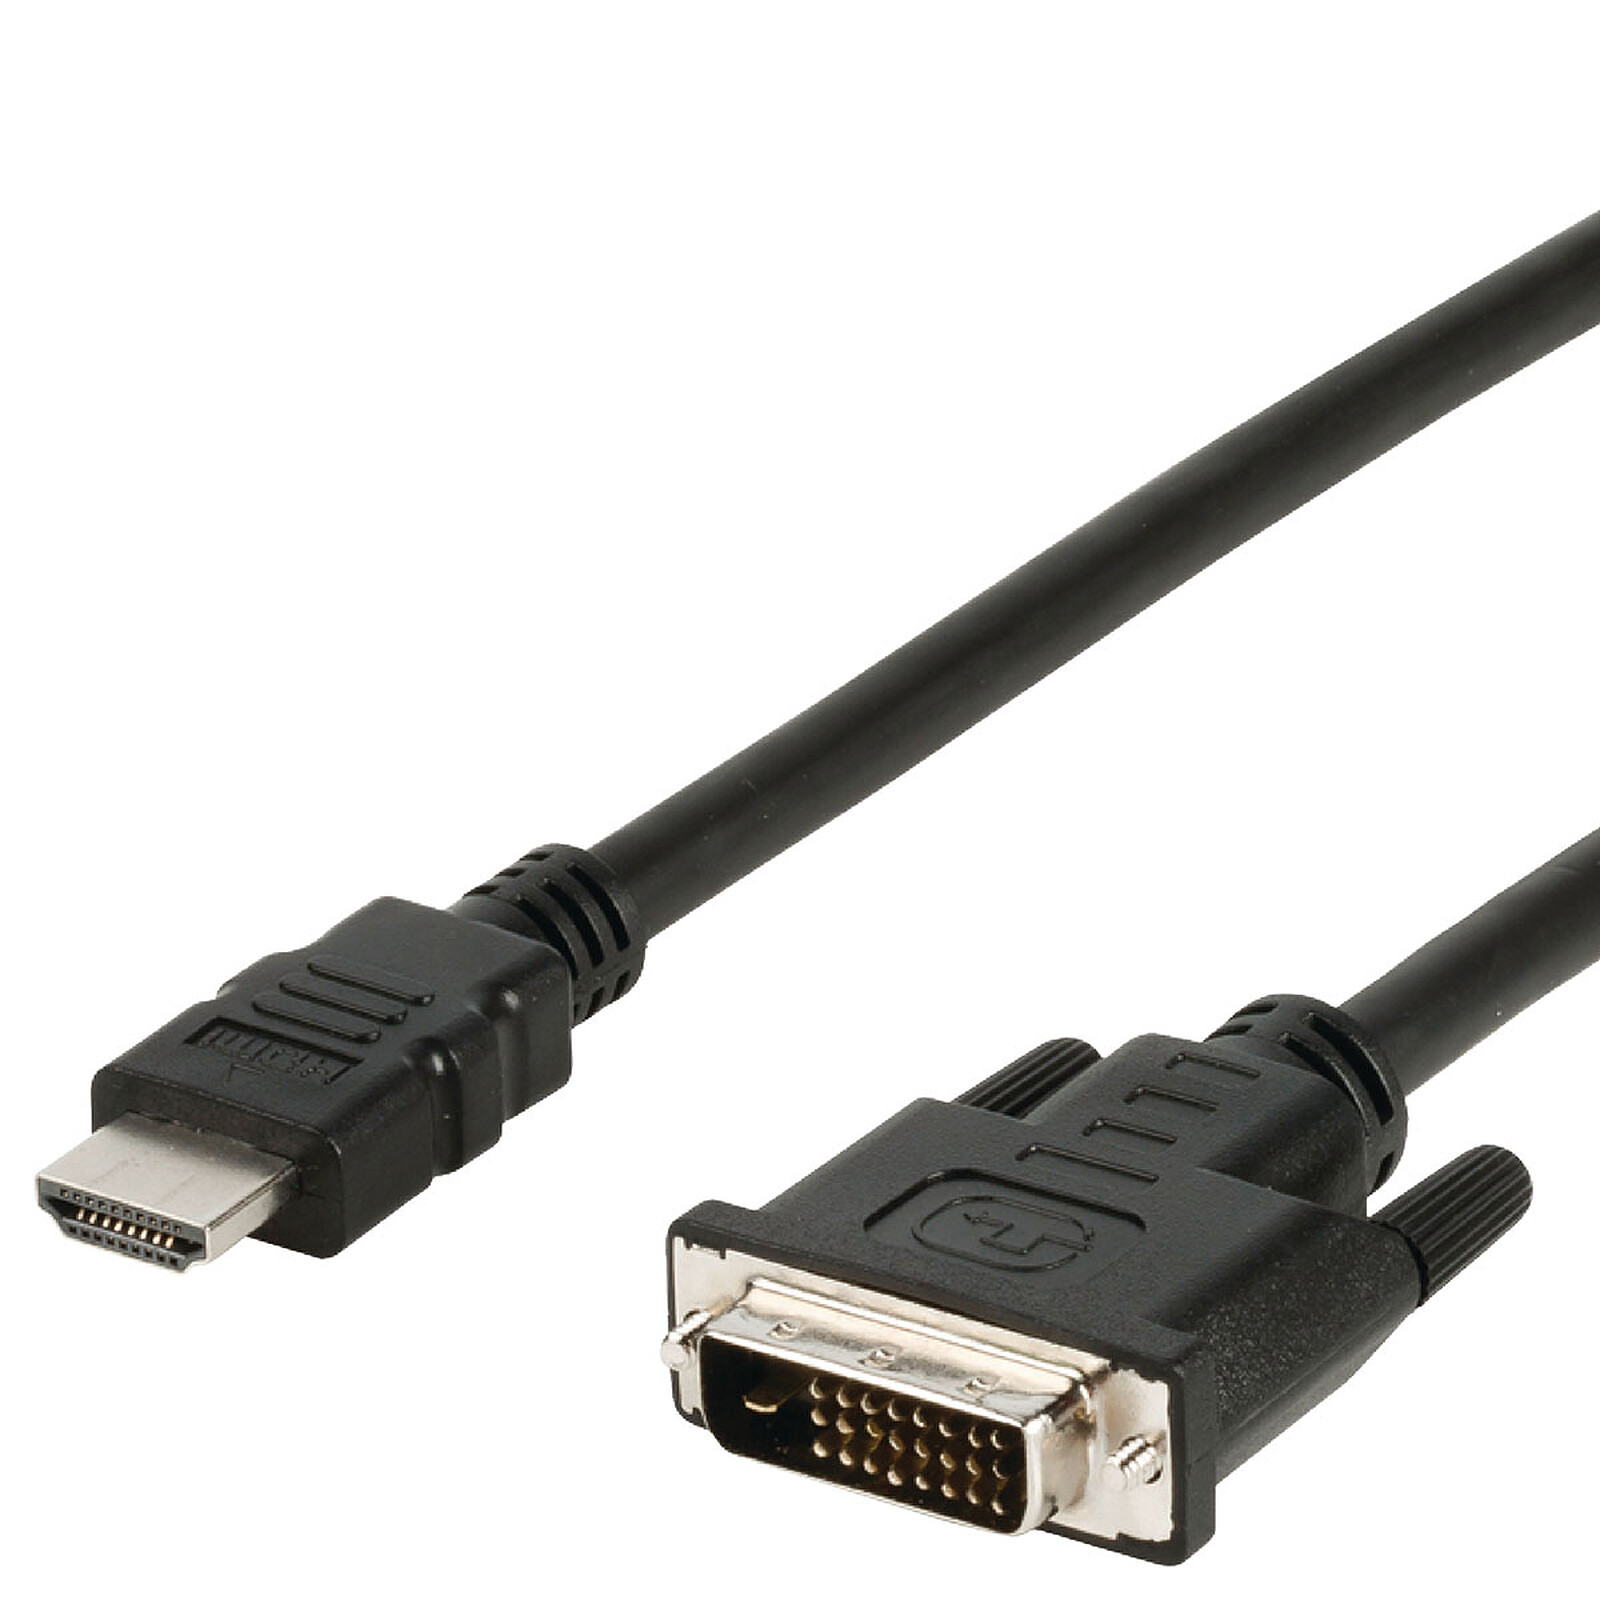 Penelope suspendere Generator DVI-D Dual Link Male / HDMI Male Cable (2 meters) - DVI Generic on LDLC